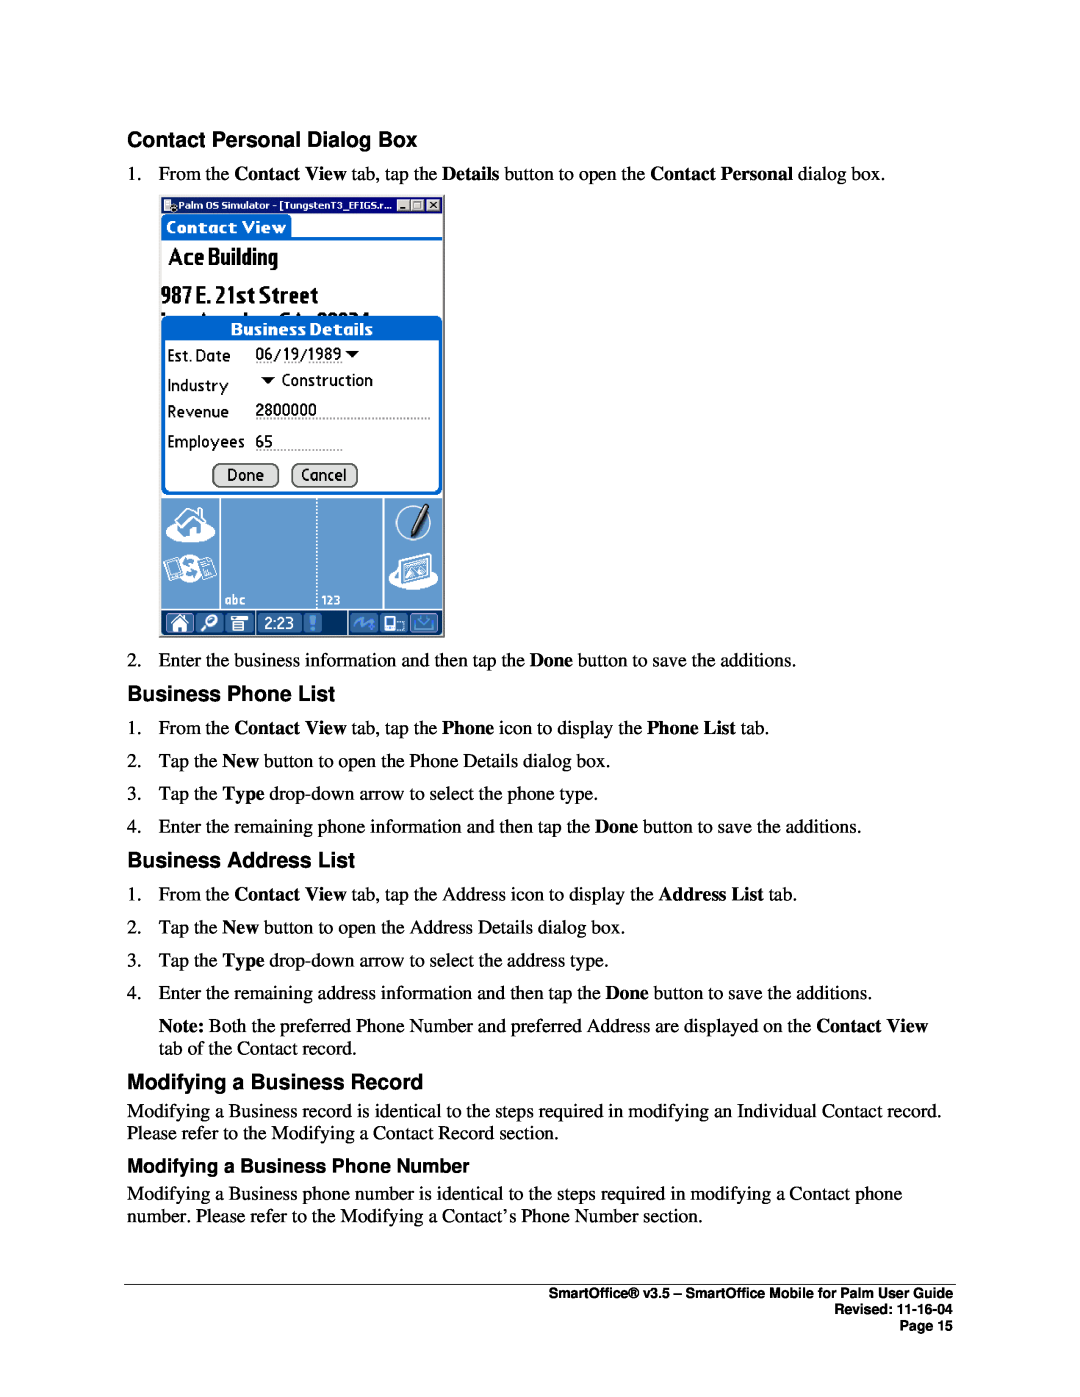 Palm SmartOffice Mobile manual Business Phone List, Business Address List, Modifying a Business Record 